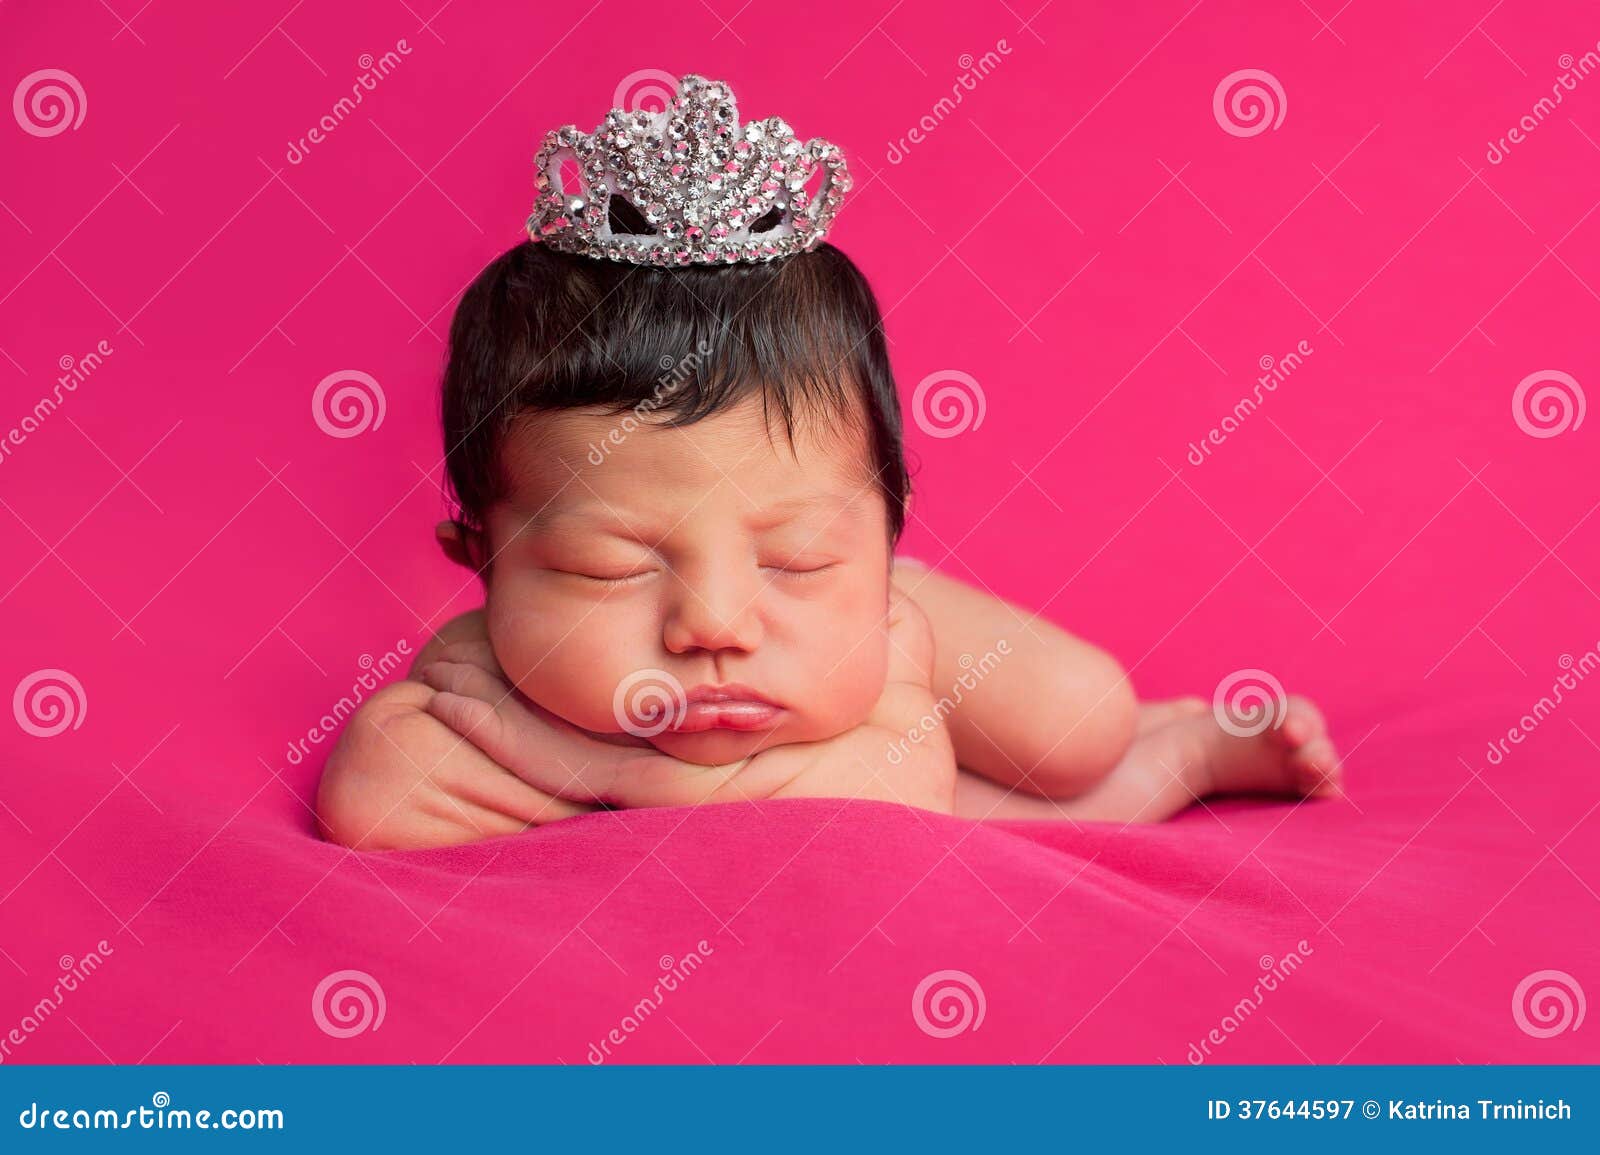 Retro Neugeborenes Baby Mini Tiara Krone Foto Requisit Vollkreis rund T1823 